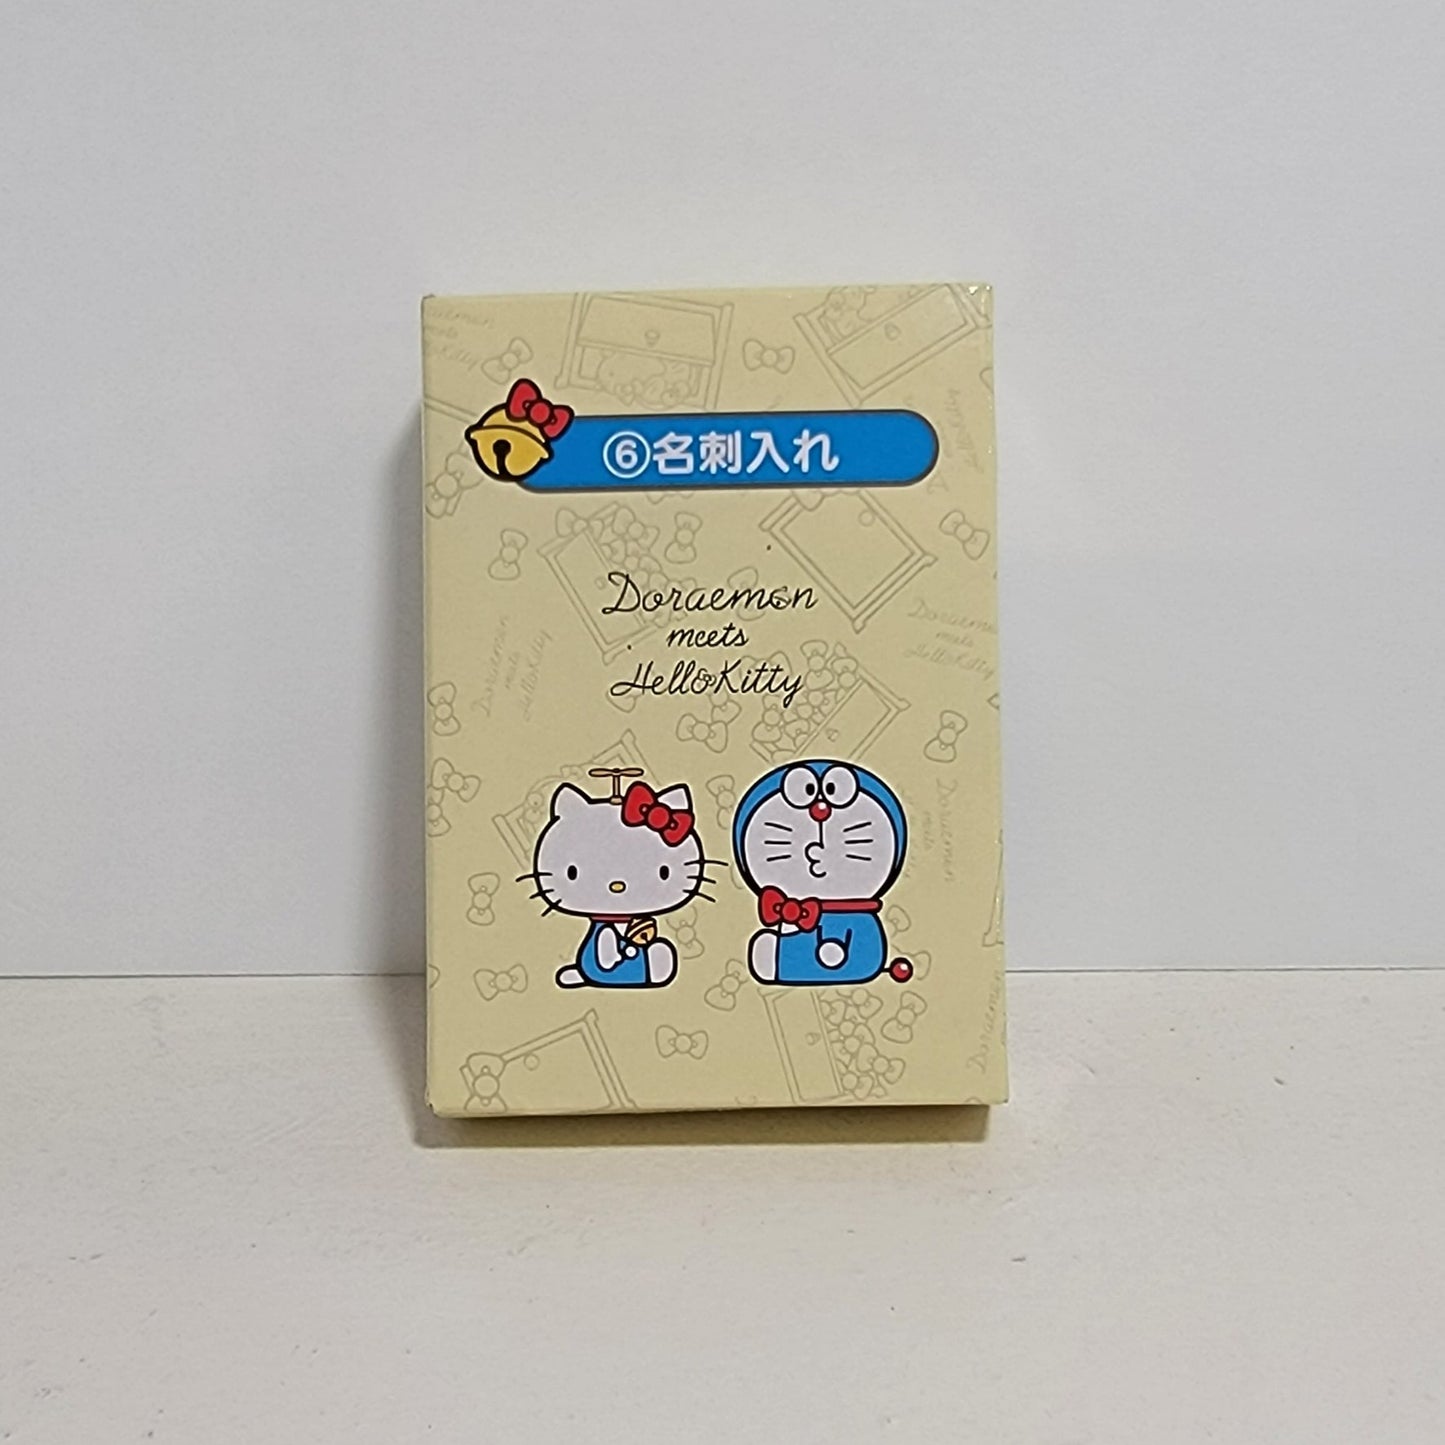 Doraemon Meets Hello Kitty - Anywhere Door ”Doko Demo" Cards Holder